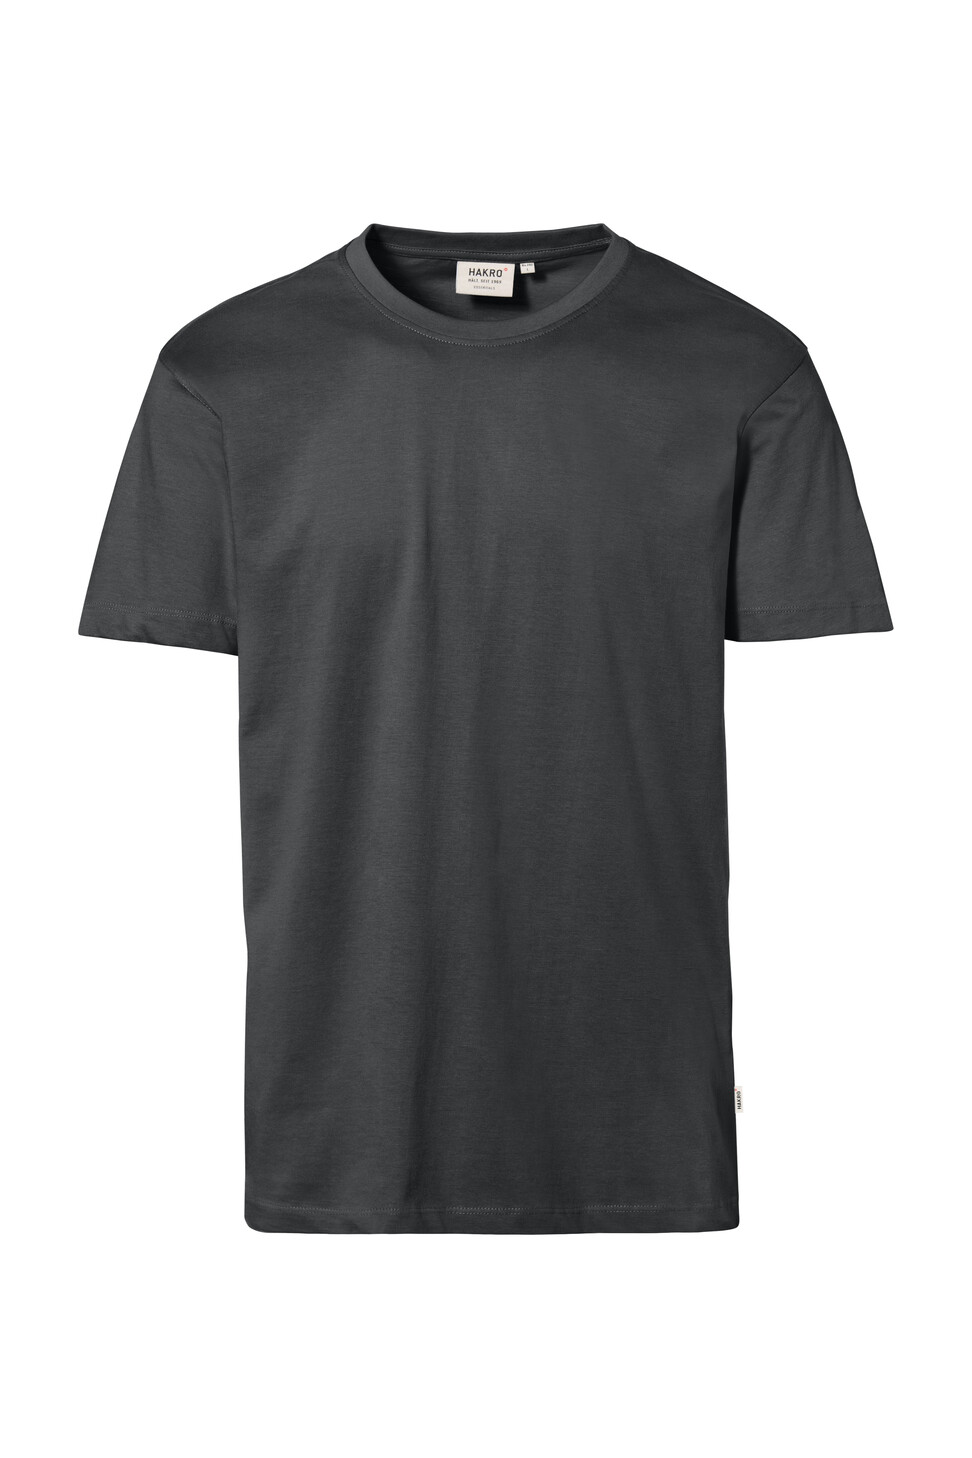 HAKRO T-Shirt Classic, anthrazit, XS, 292